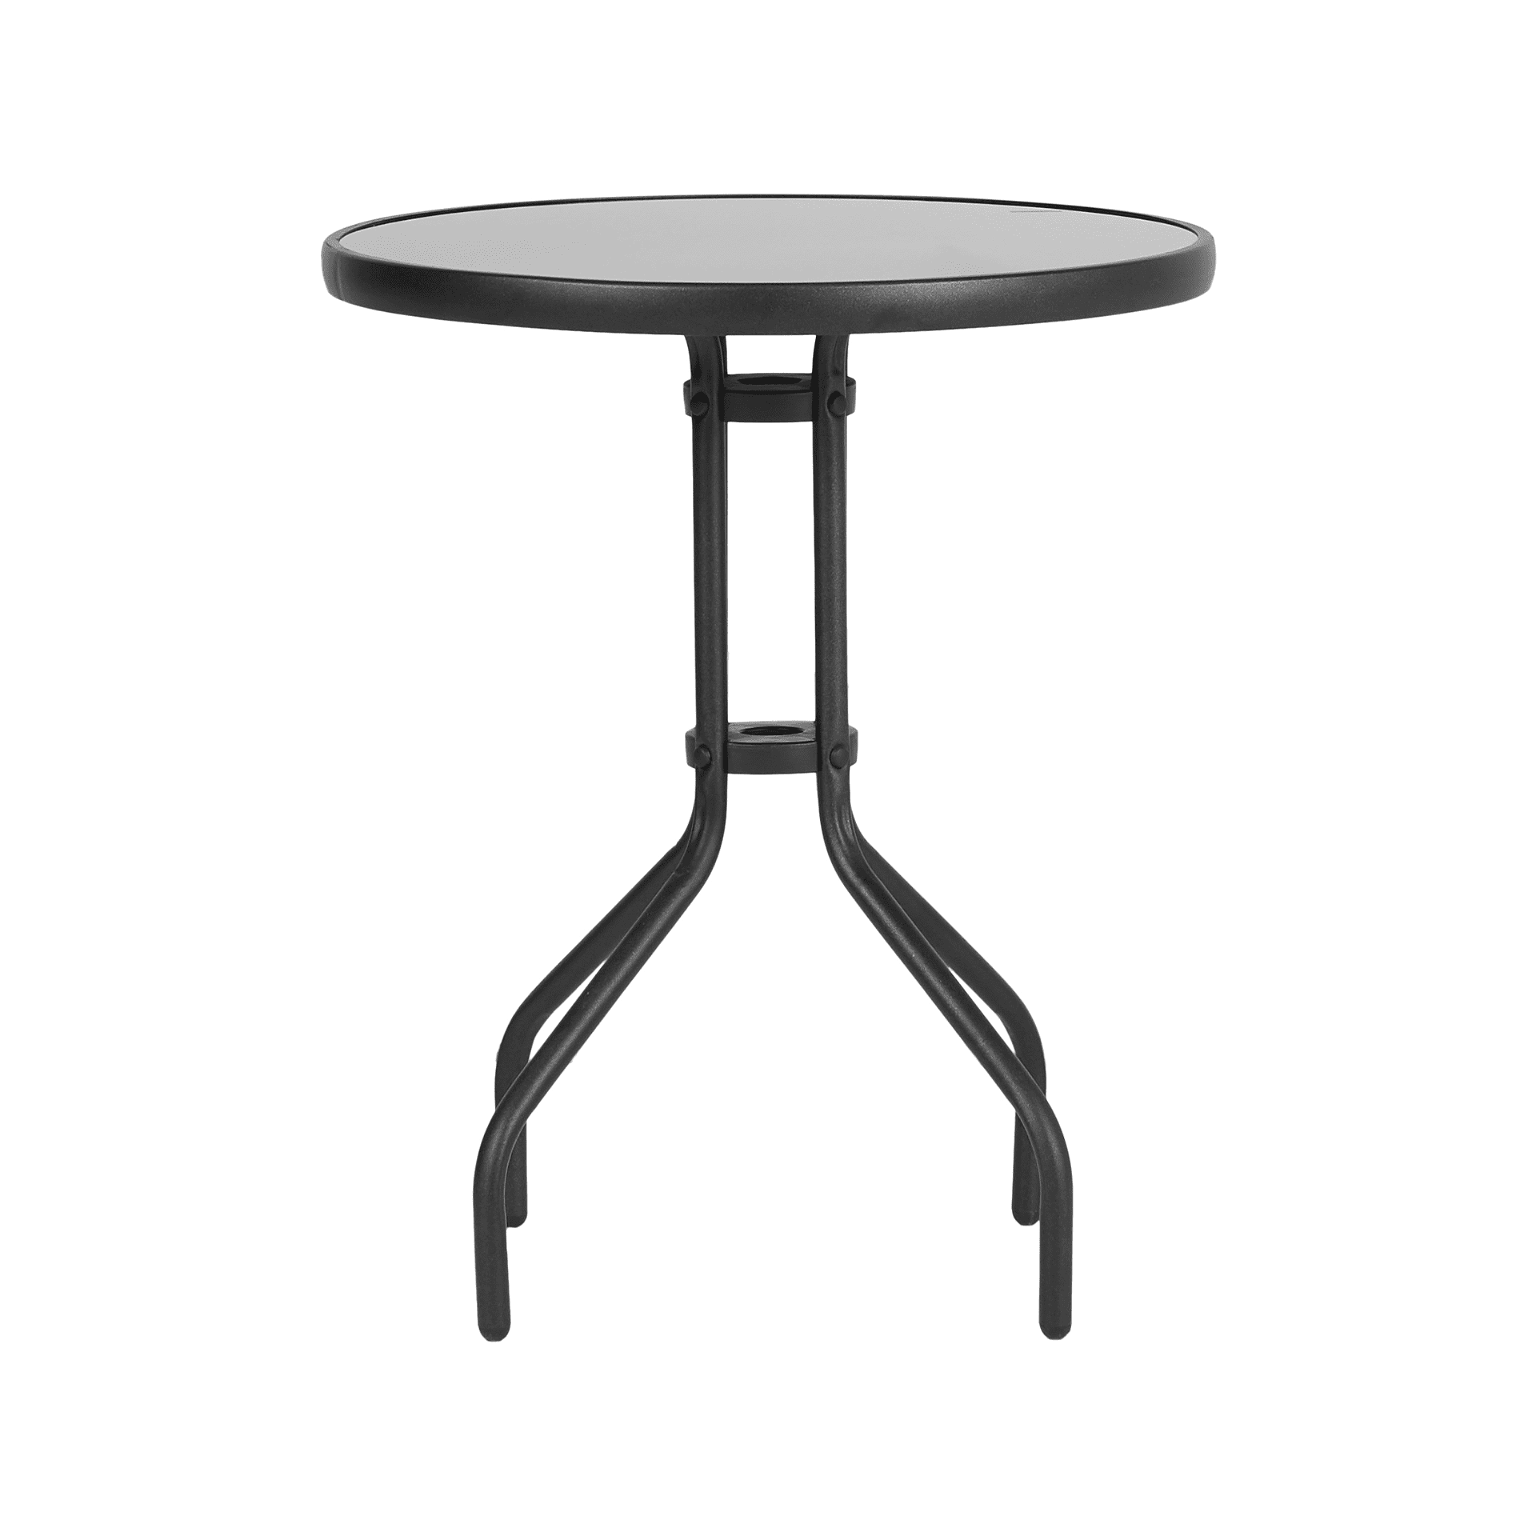 Lauko stalas Laimis, 60 cm, juodas